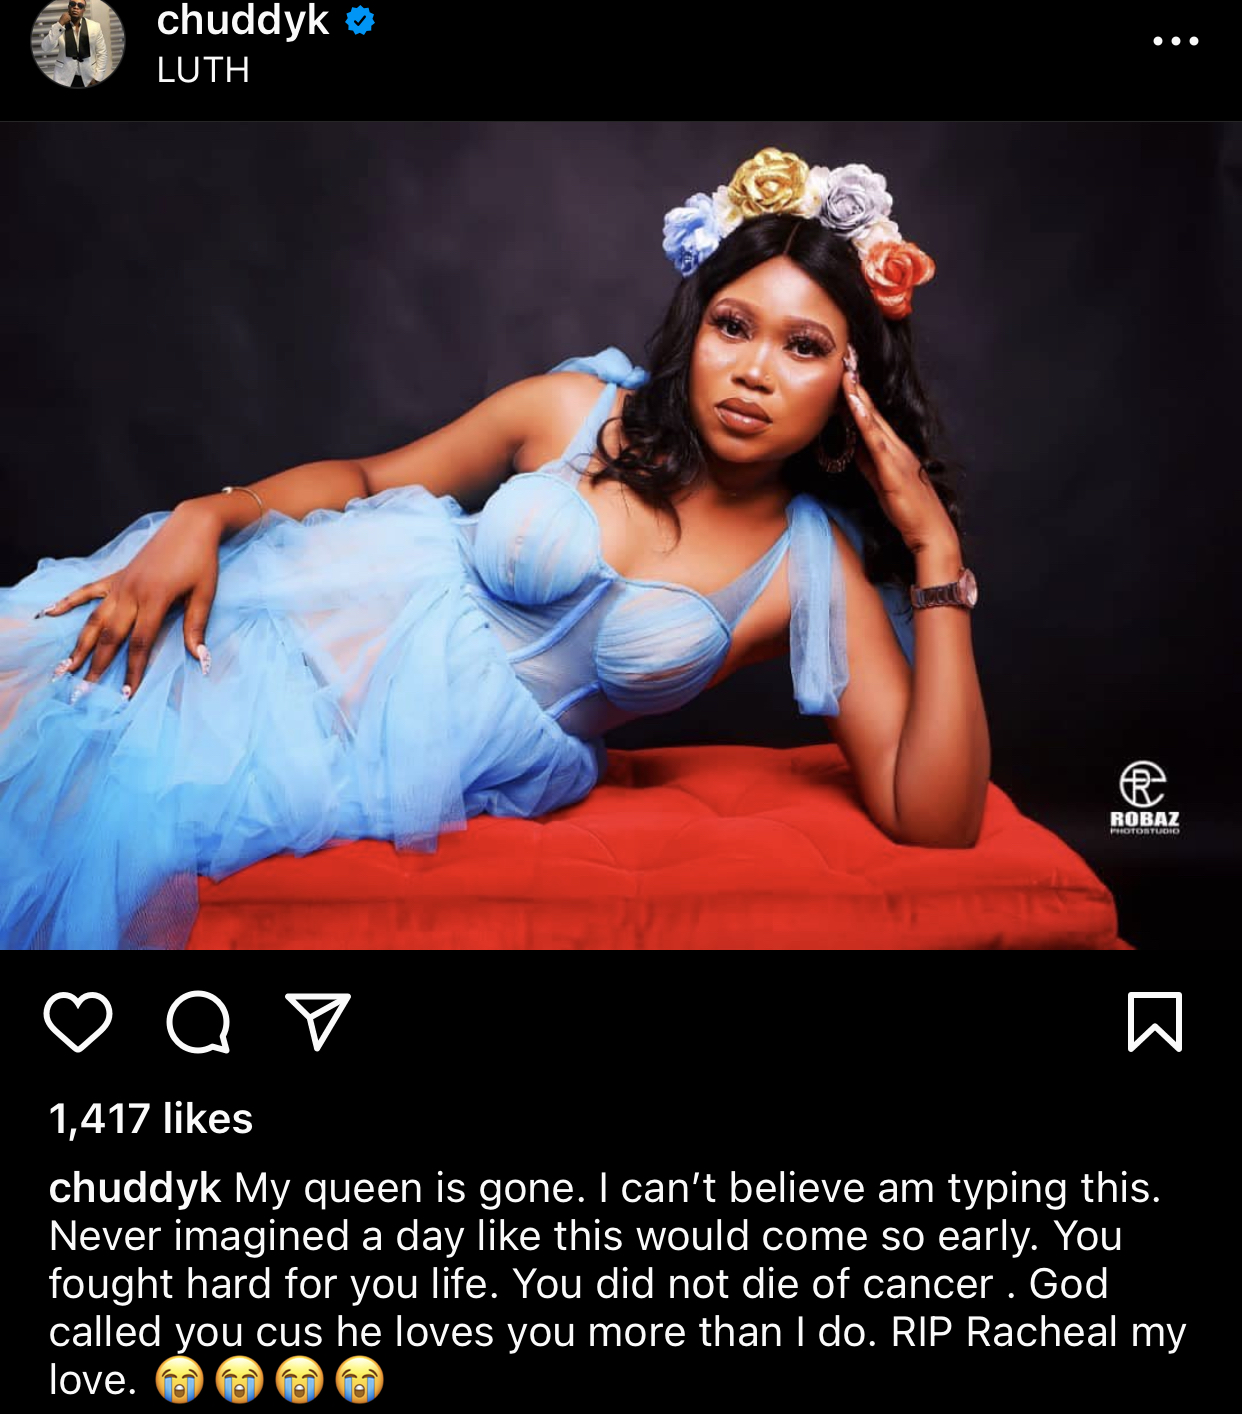 Singer ChuddyK loses Wife To Cancer 